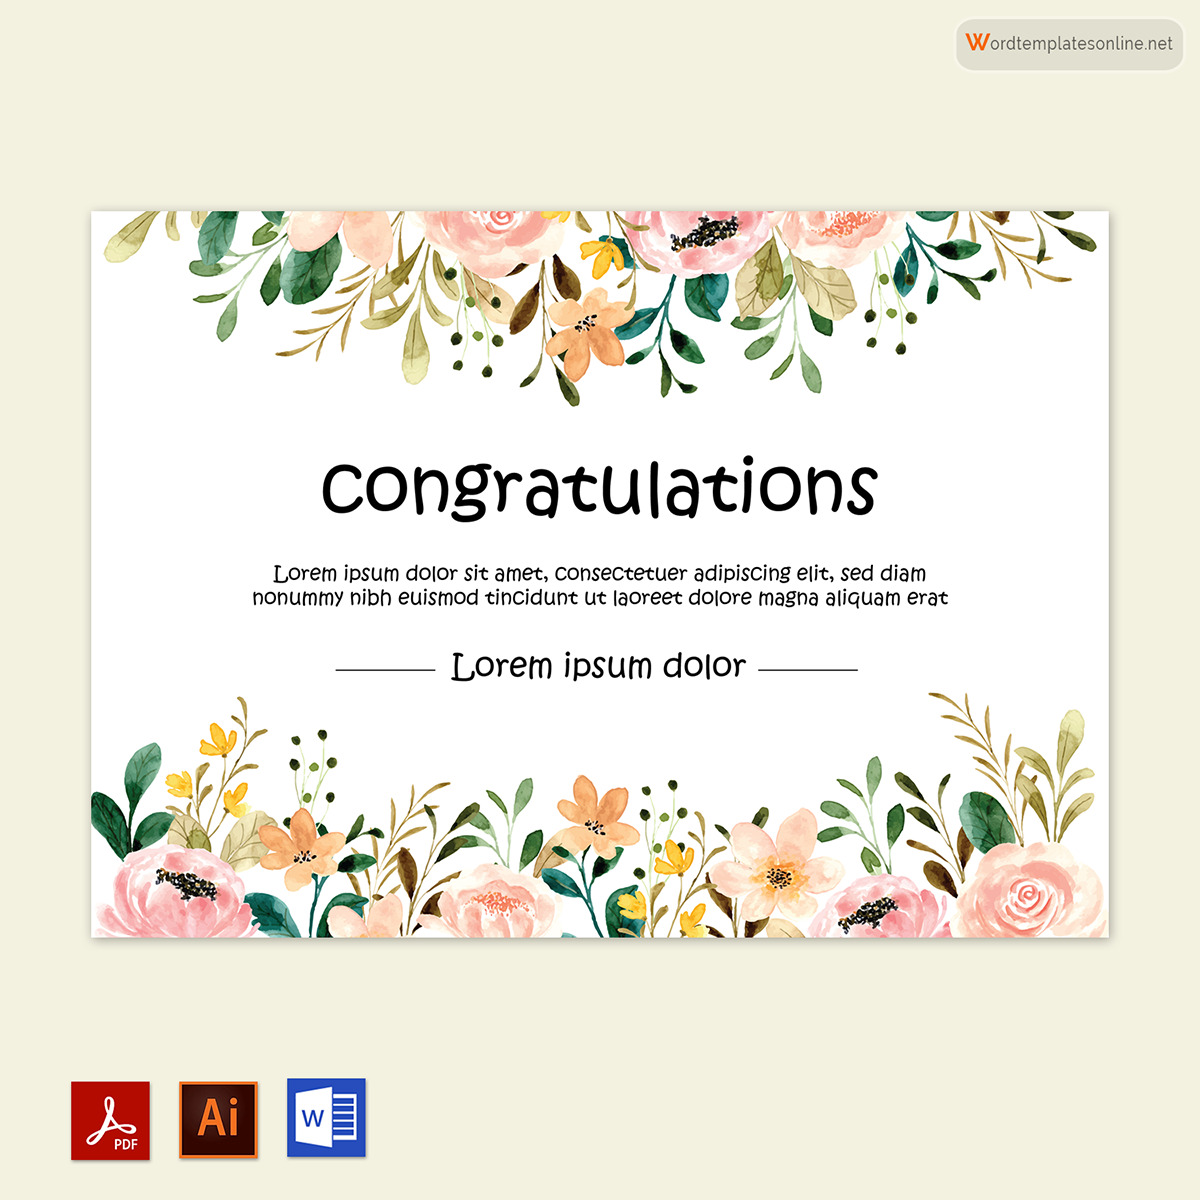 "Free editable congratulations greeting card template"